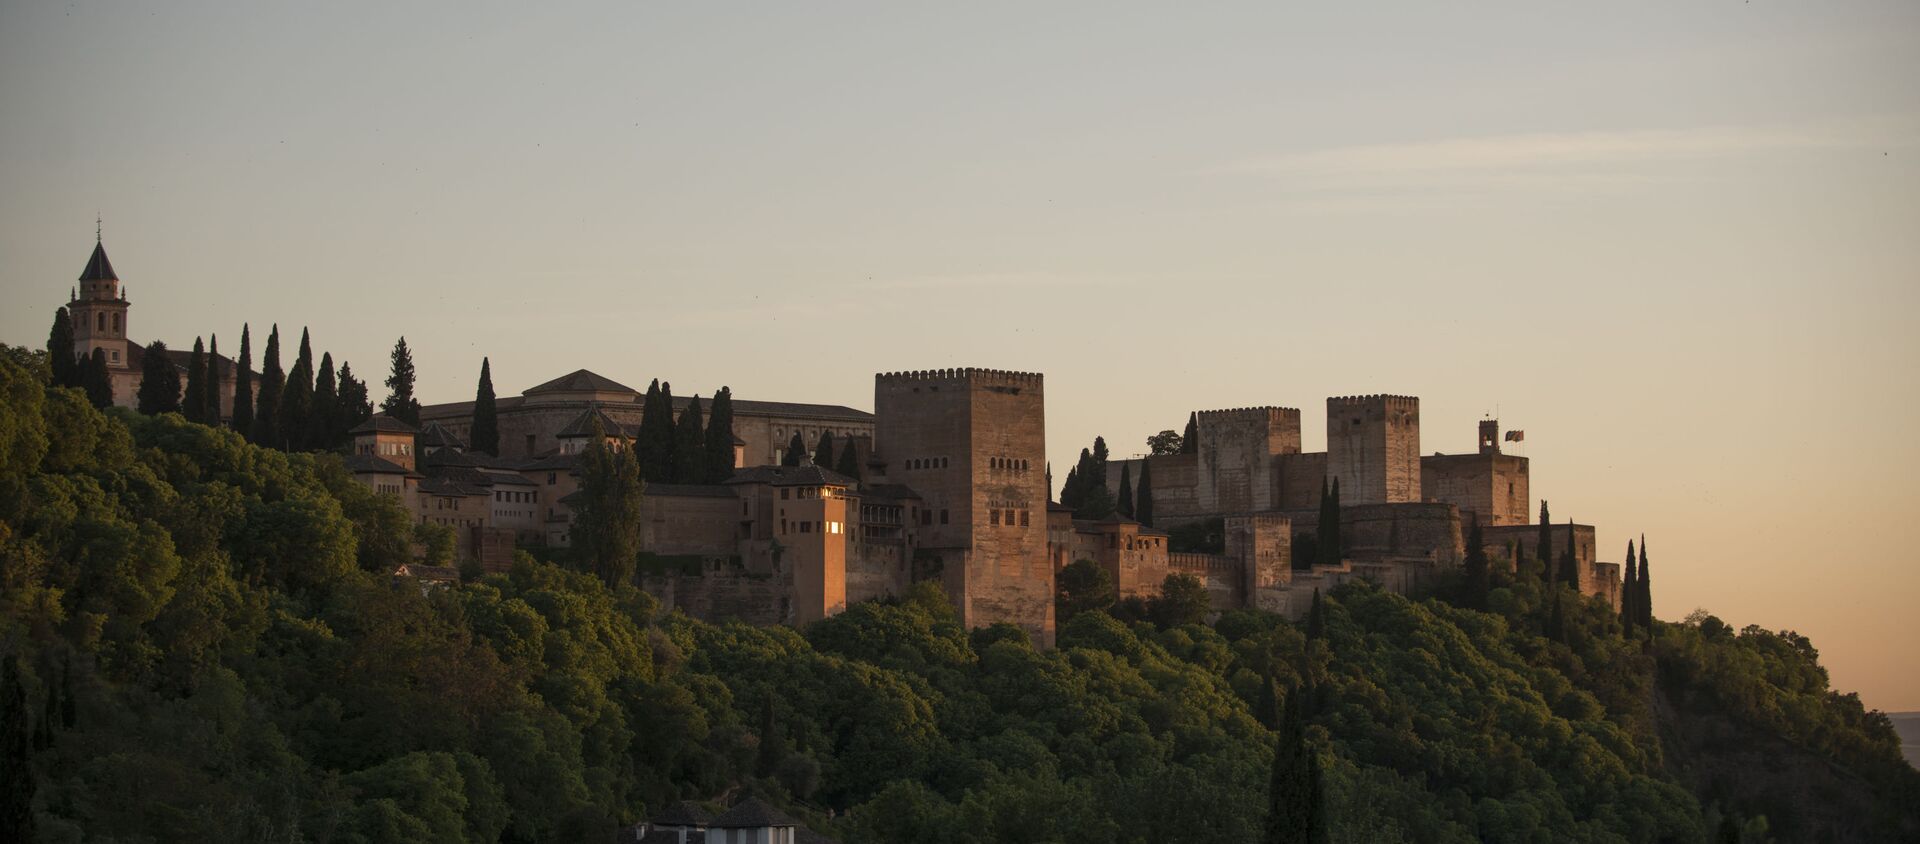 Vista general de la Alhambra de Granada. 2 de mayo de 2020. - Sputnik Mundo, 1920, 28.01.2021